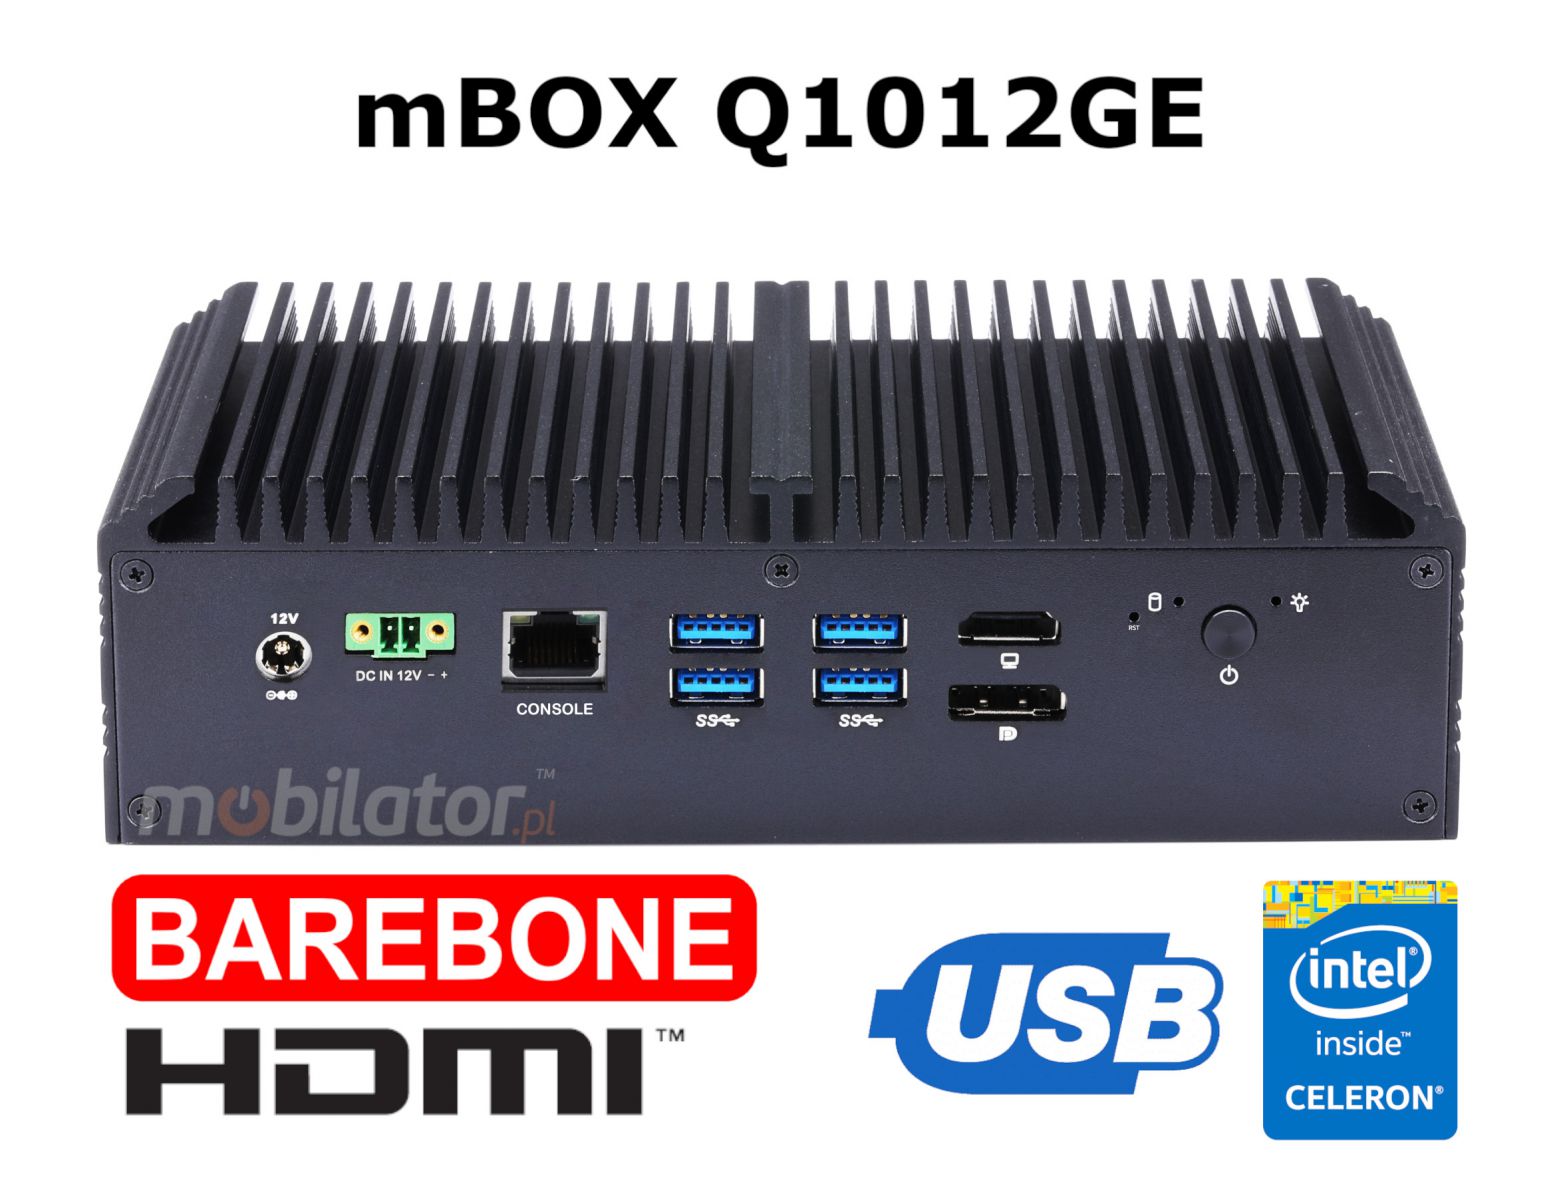 mBOX Q1012GE barebone wersja 1, HDMI, intel Celeron